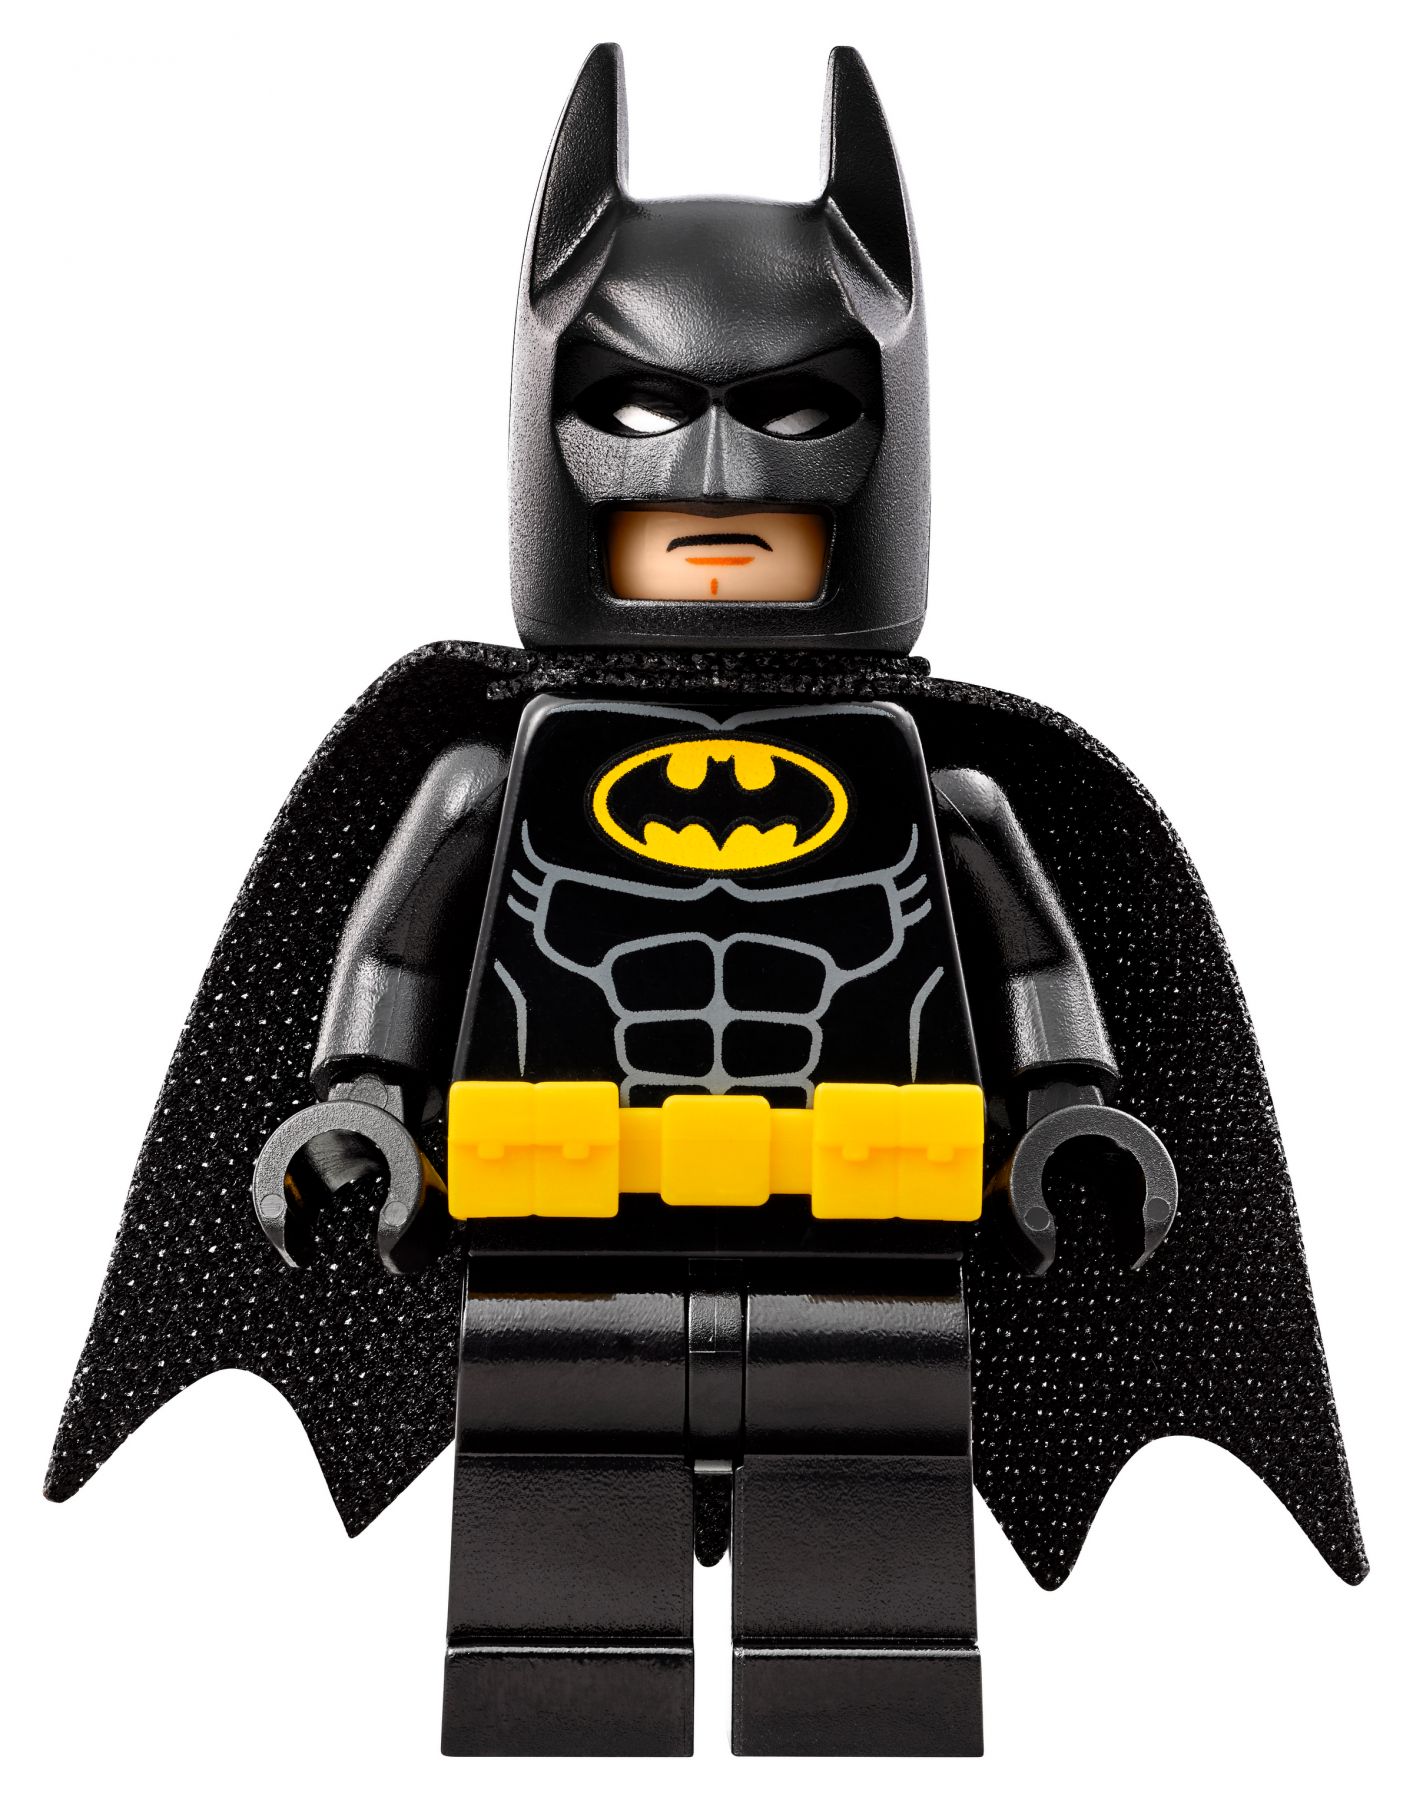 LEGO The LEGO Batman Movie 70903 The Riddler™: Riddle Racer LEGO_70903_alt11.jpg